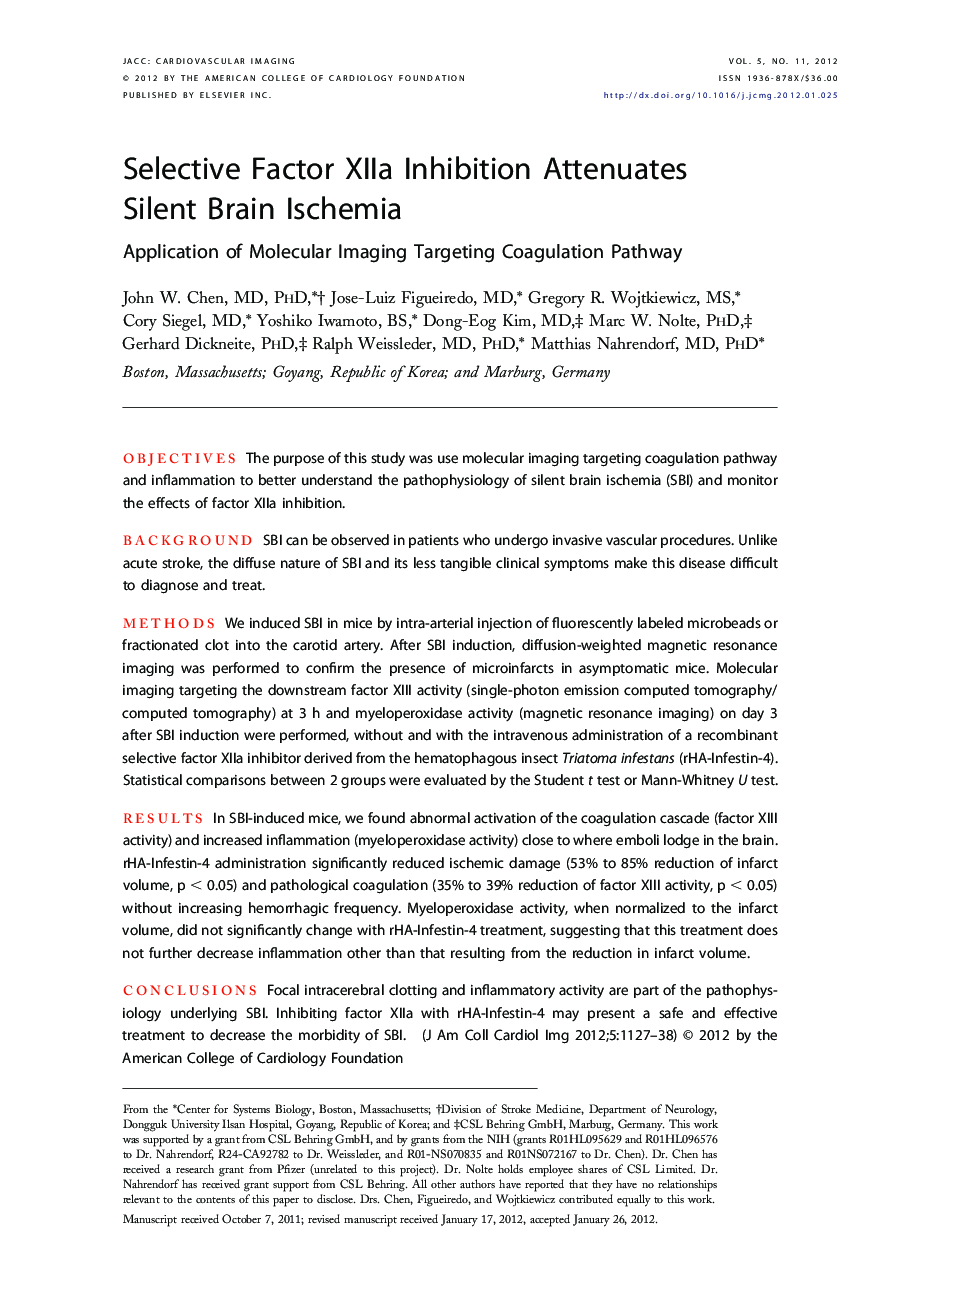 Selective Factor XIIa Inhibition Attenuates Silent Brain Ischemia : Application of Molecular Imaging Targeting Coagulation Pathway